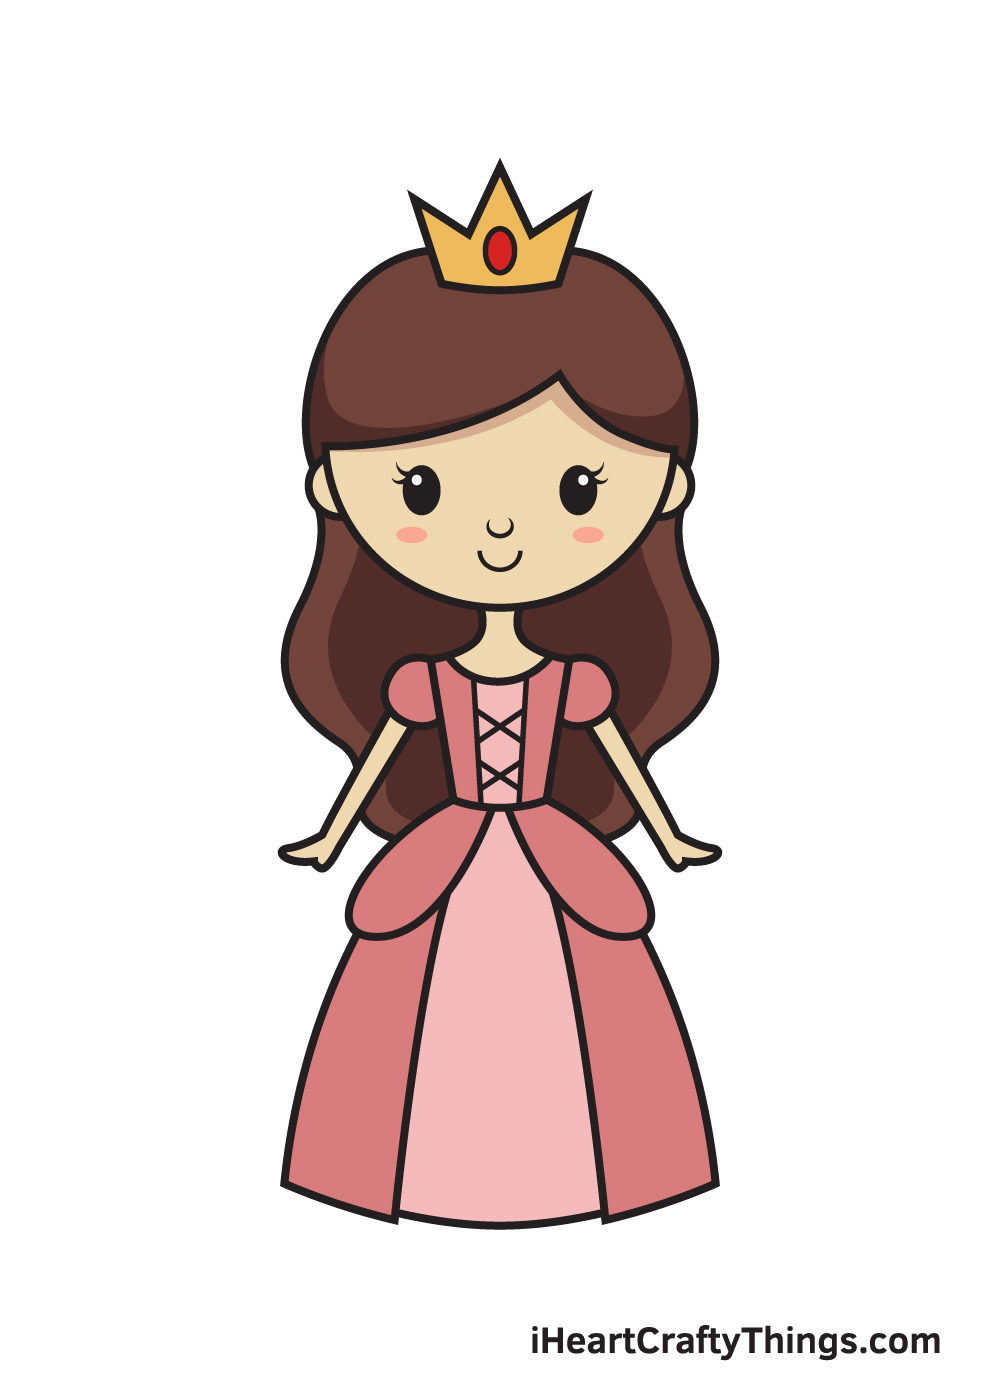 Drawing princess - 9 steps